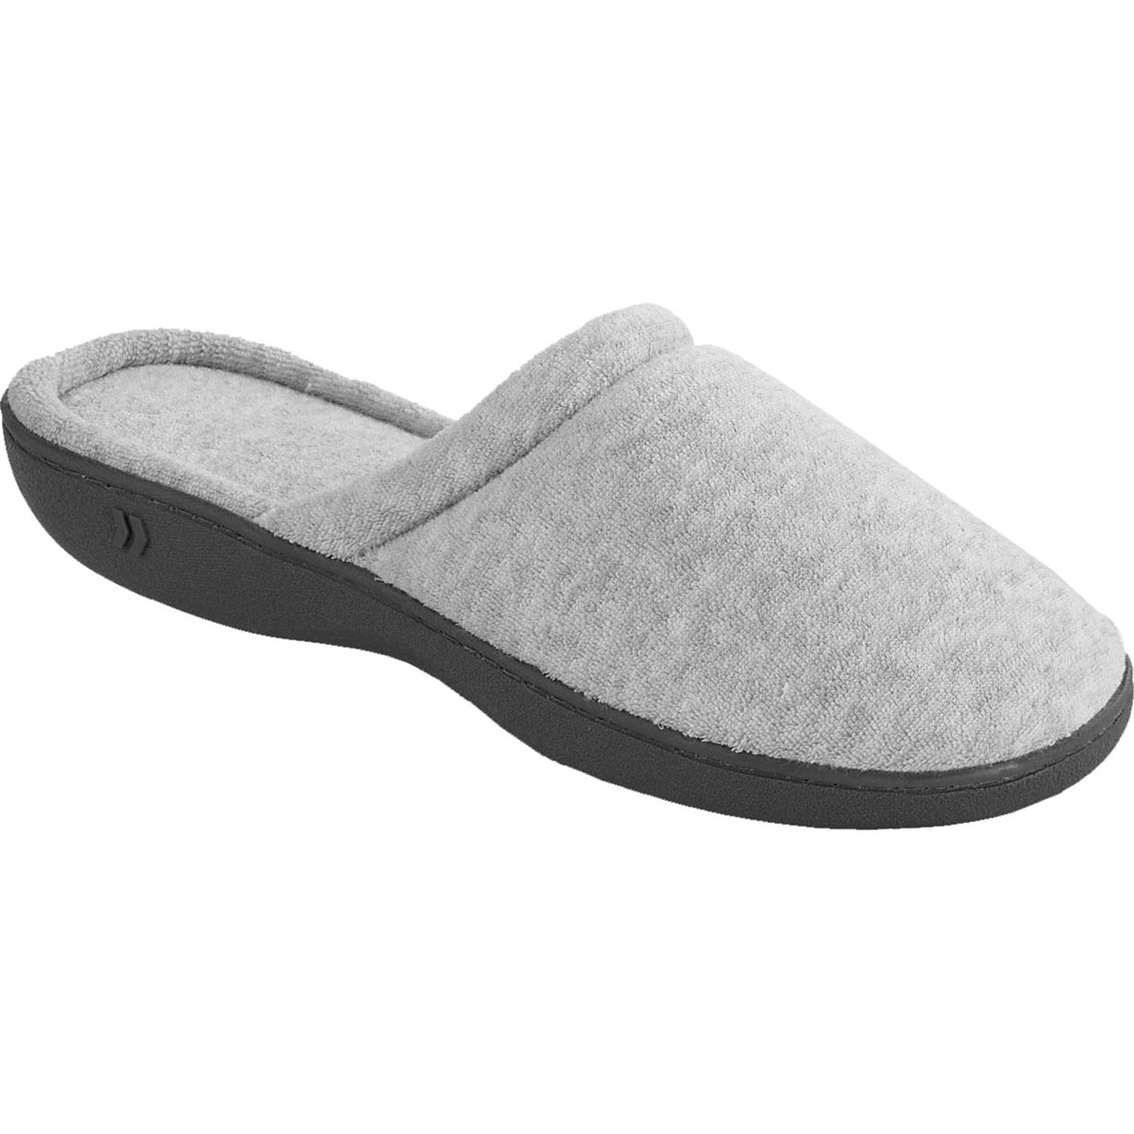 isotoner secret sole slippers